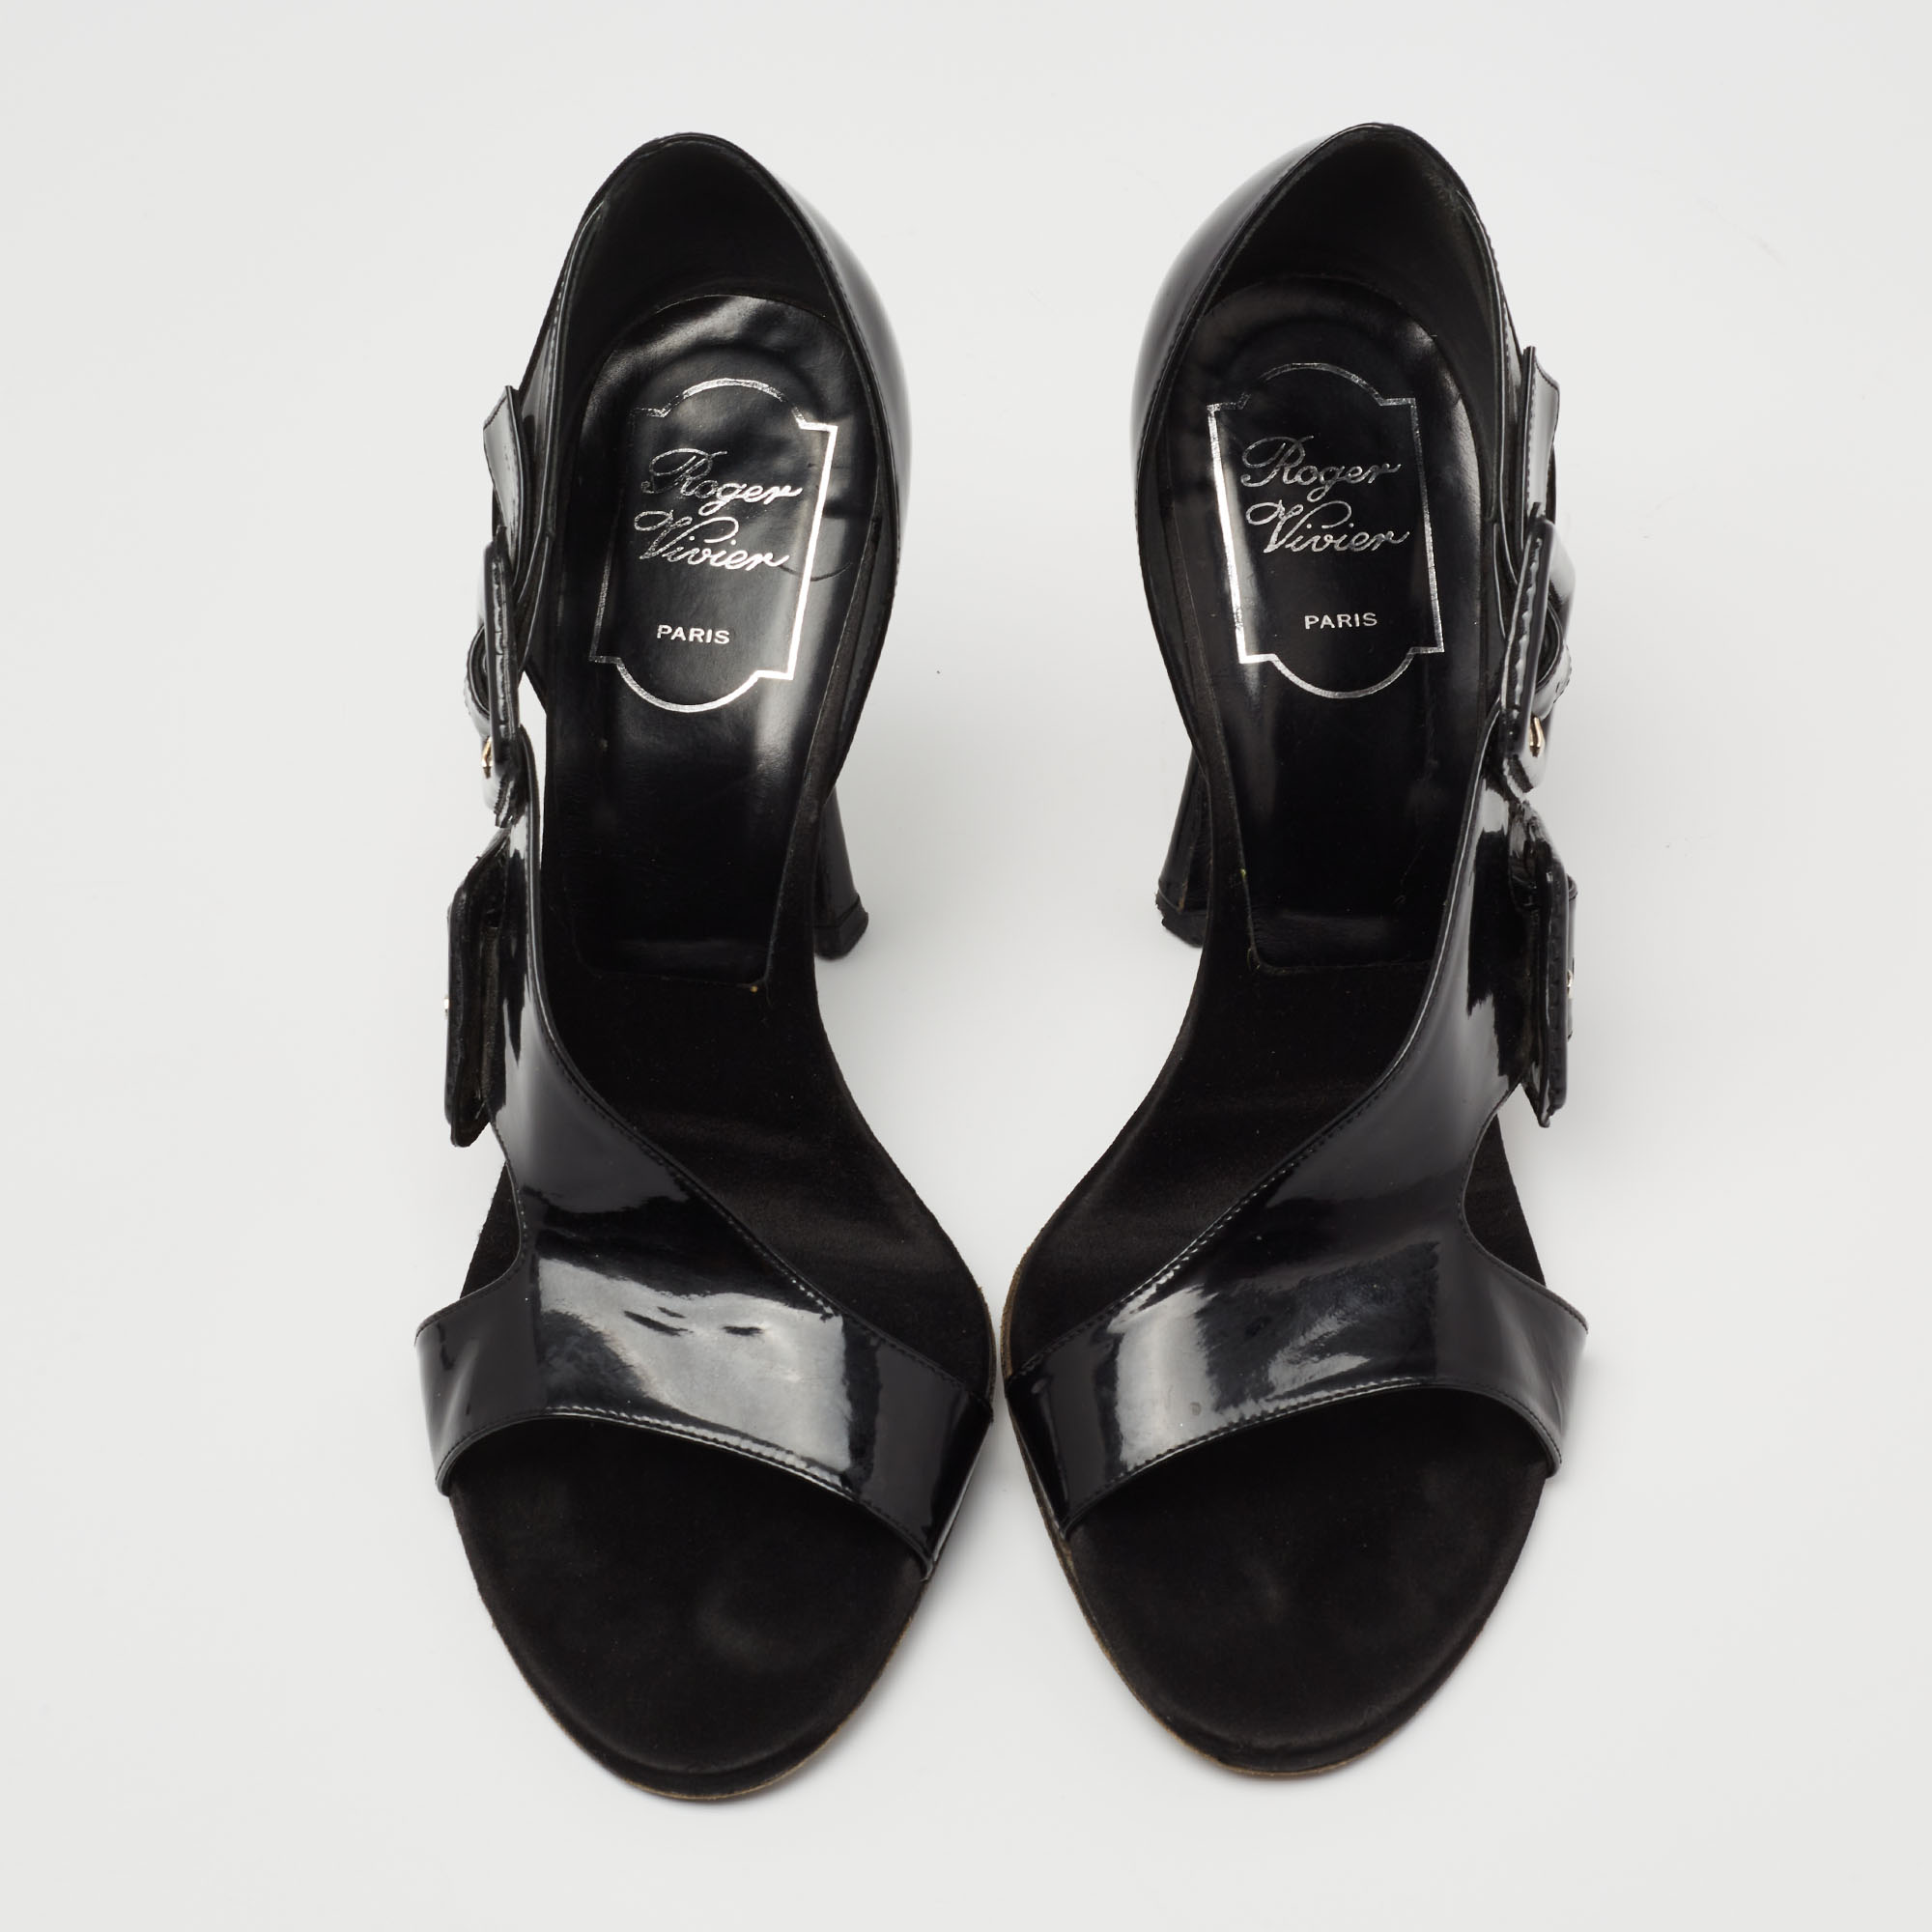 Roger Vivier  Black Patent Leather Buckle Dorsay  Sandals Size 39